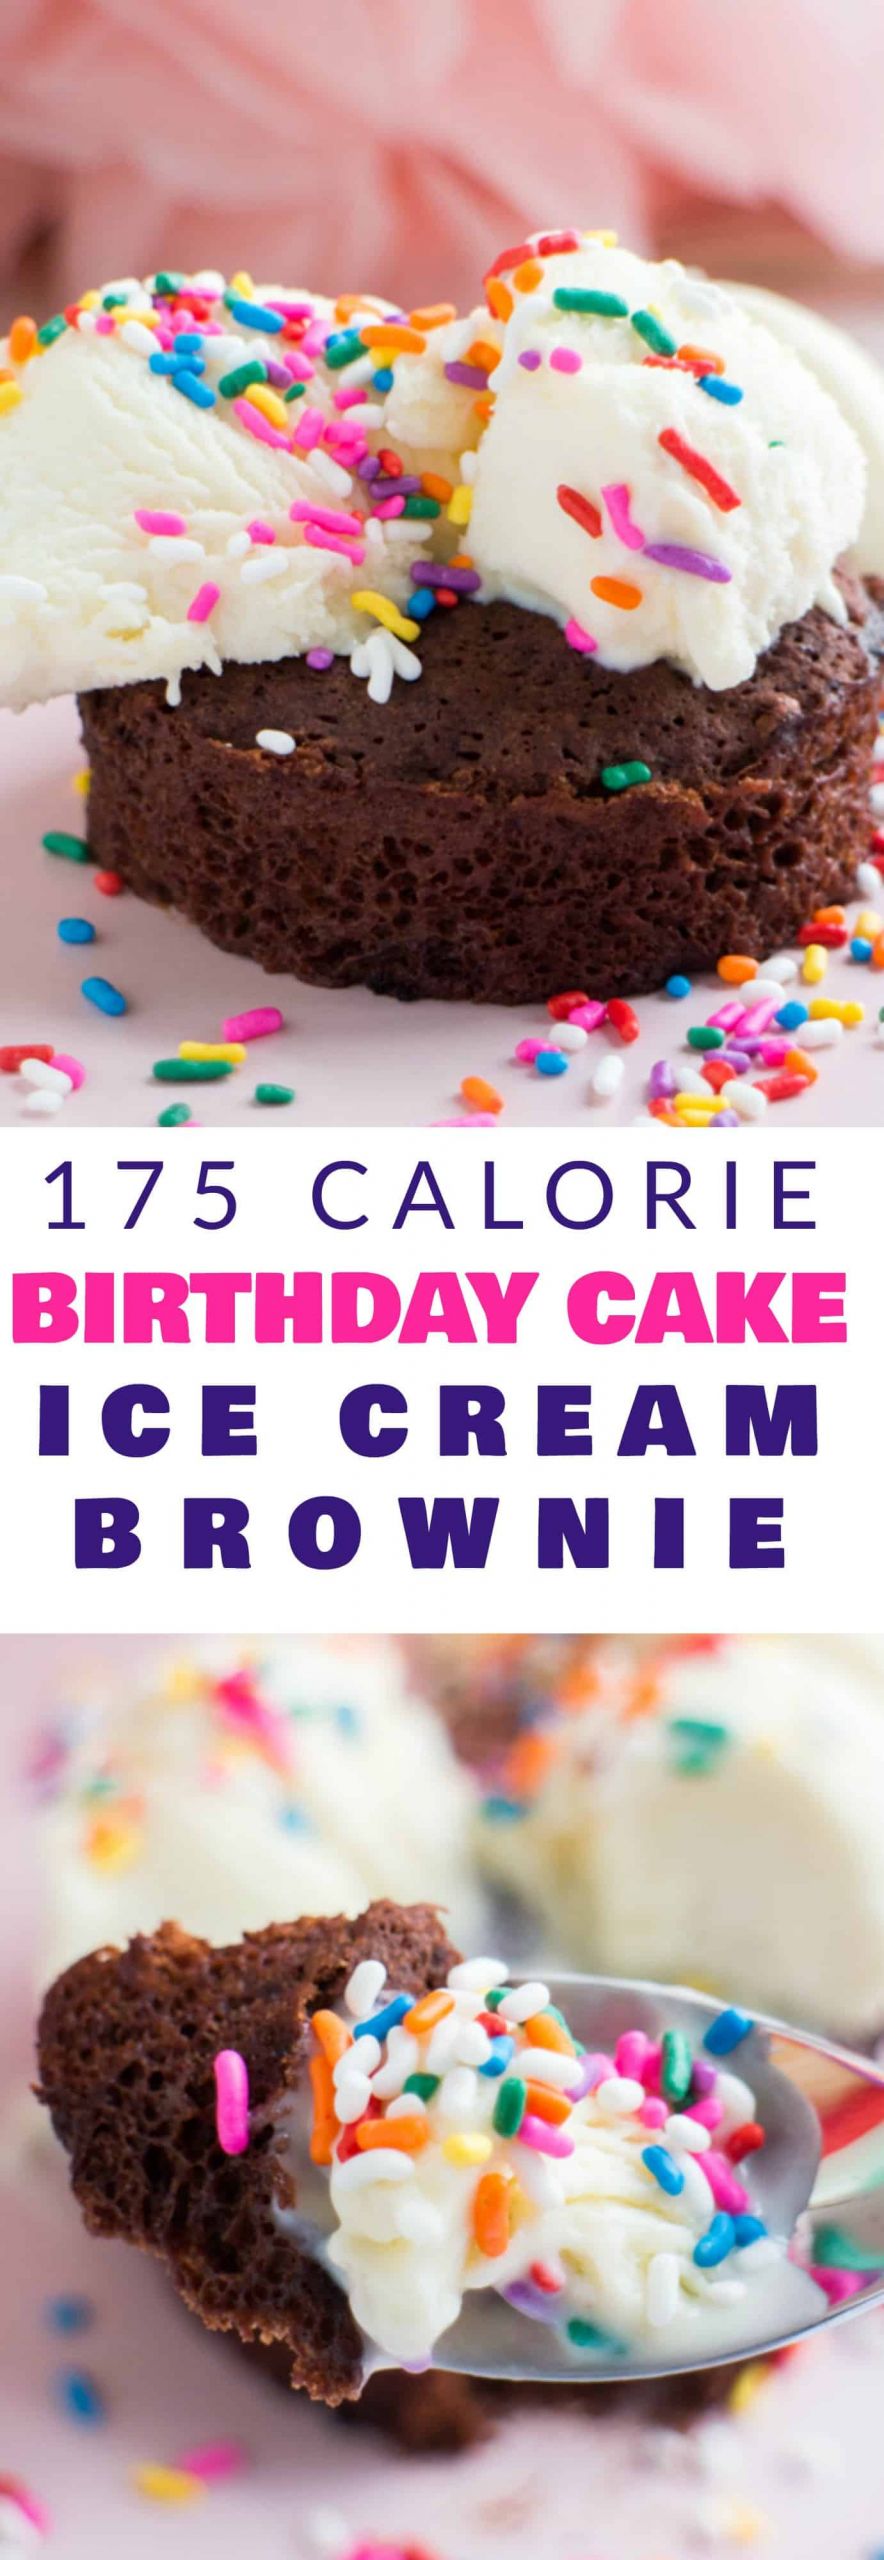 Birthday Cake Calories
 175 Calorie Birthday Cake Ice Cream Brownie Brooklyn